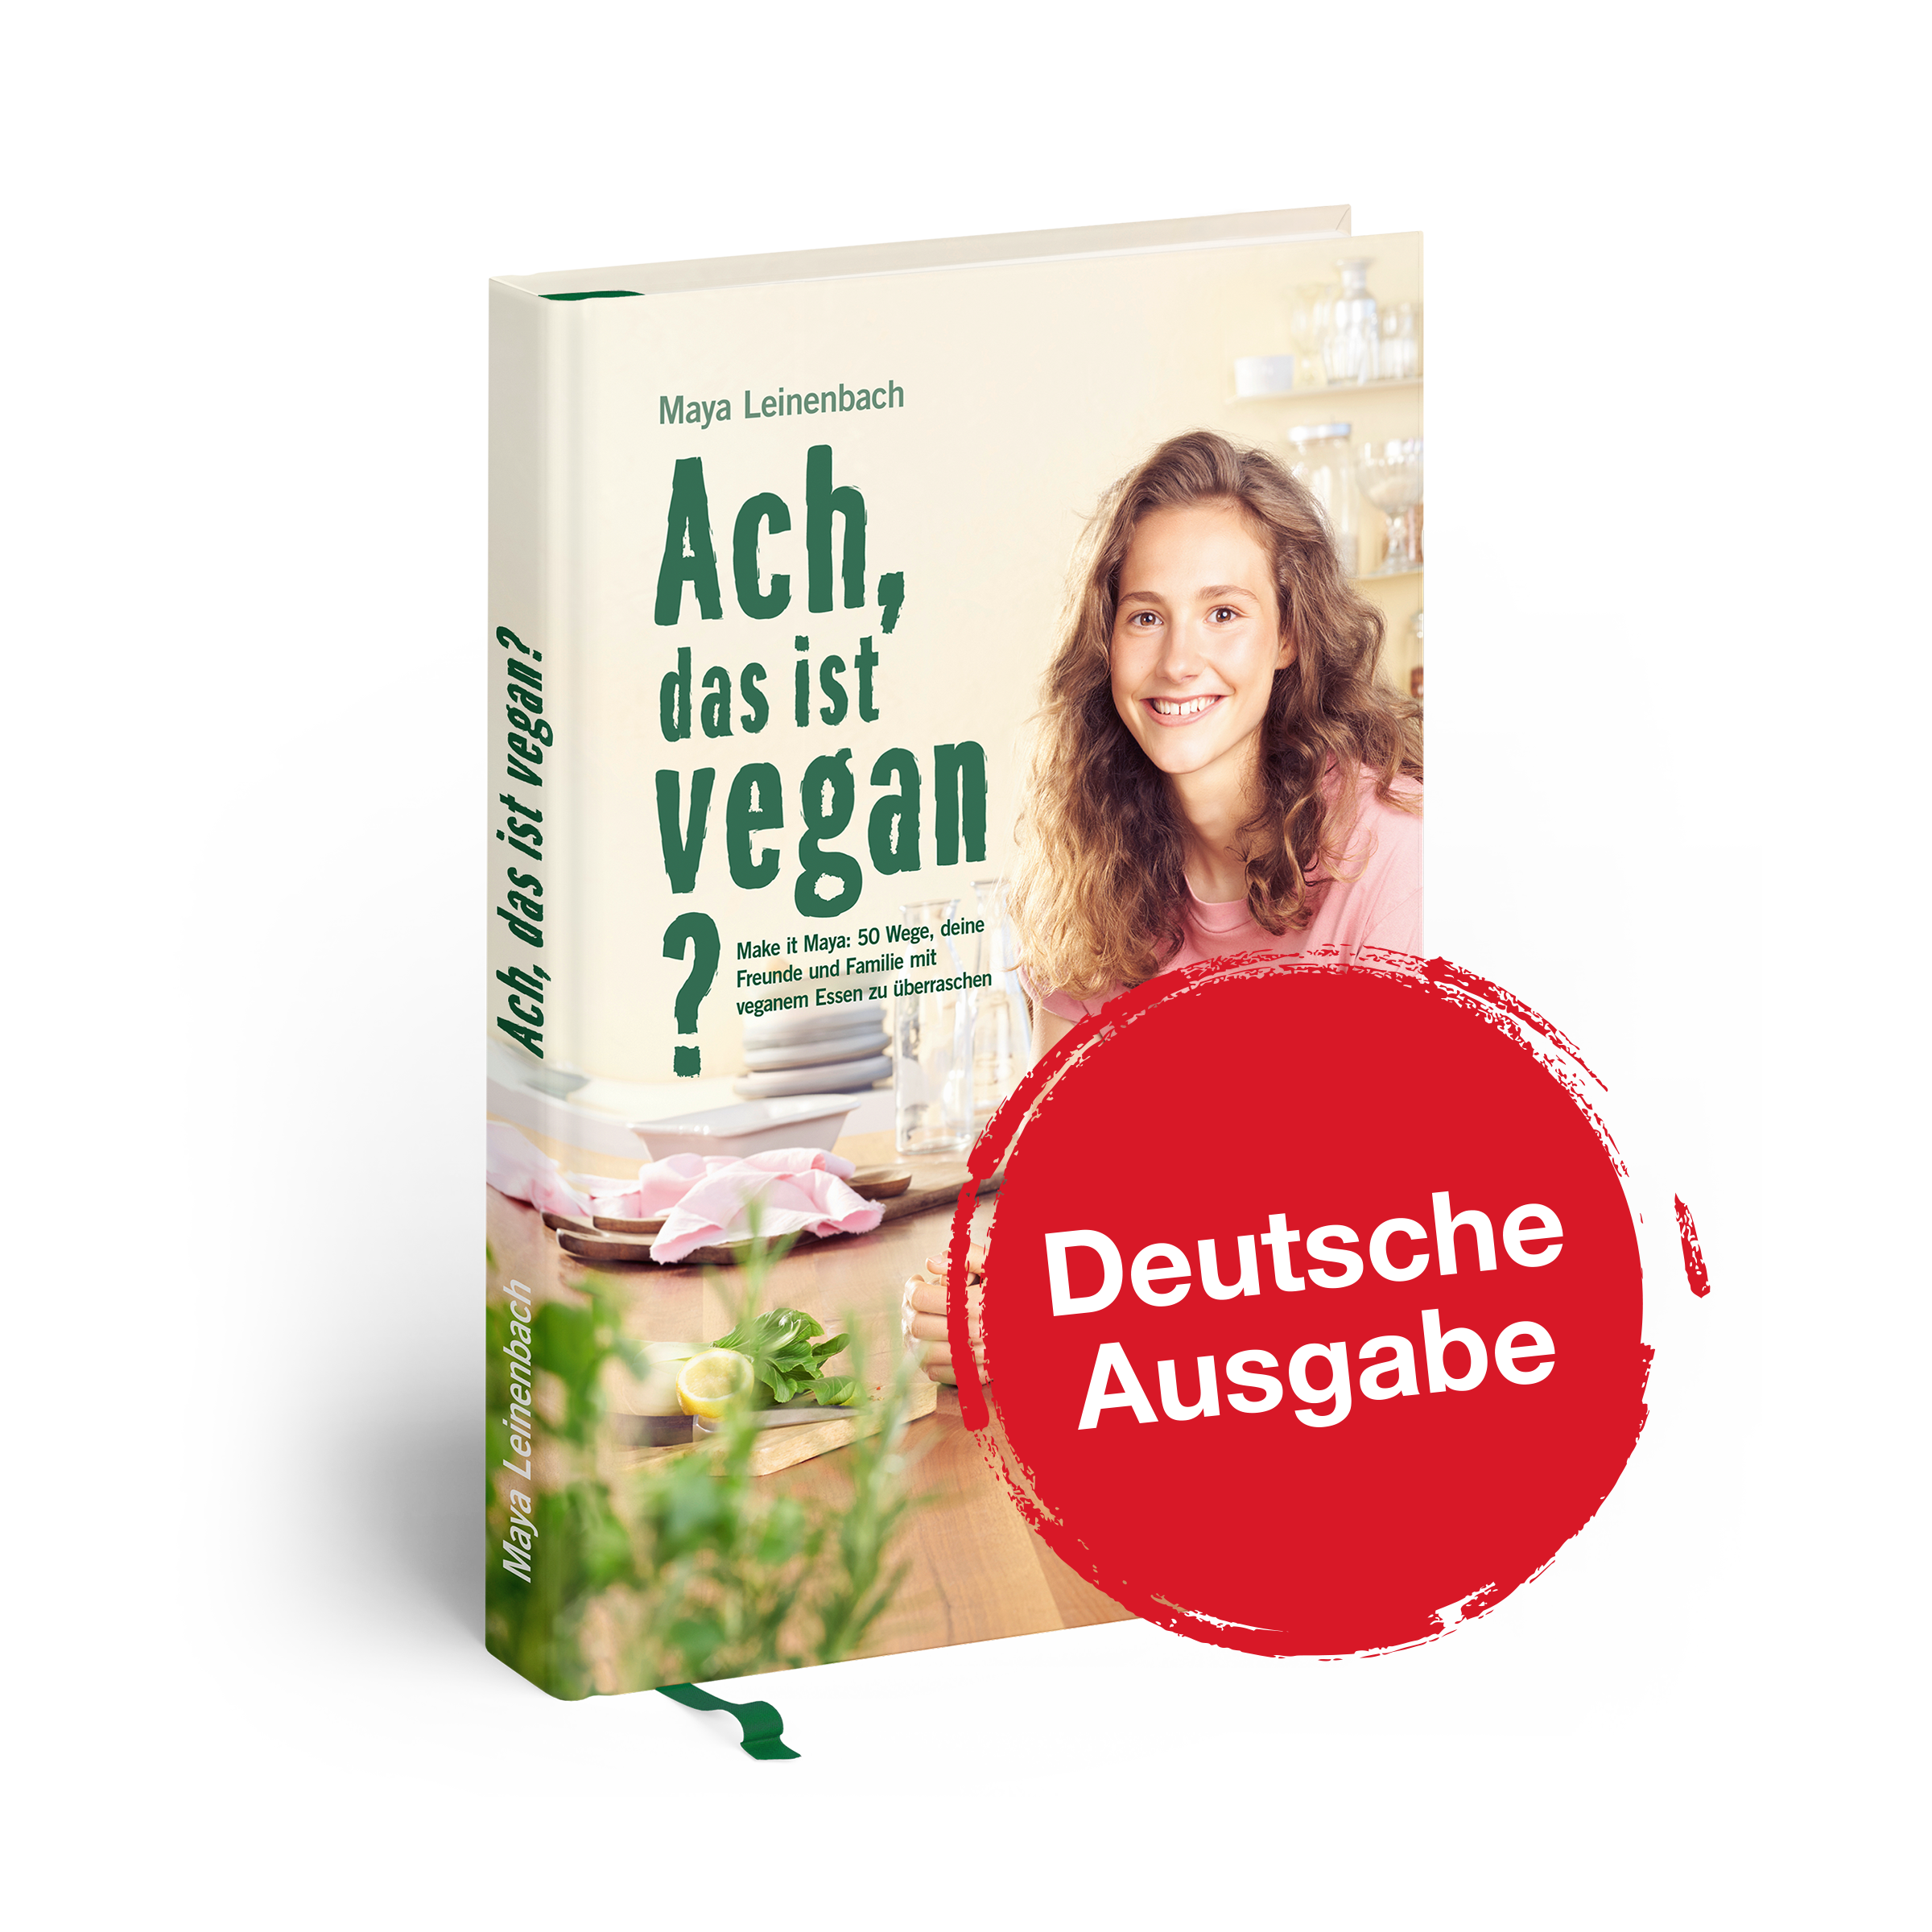 Cover of German cook book: Ach das ist vegan